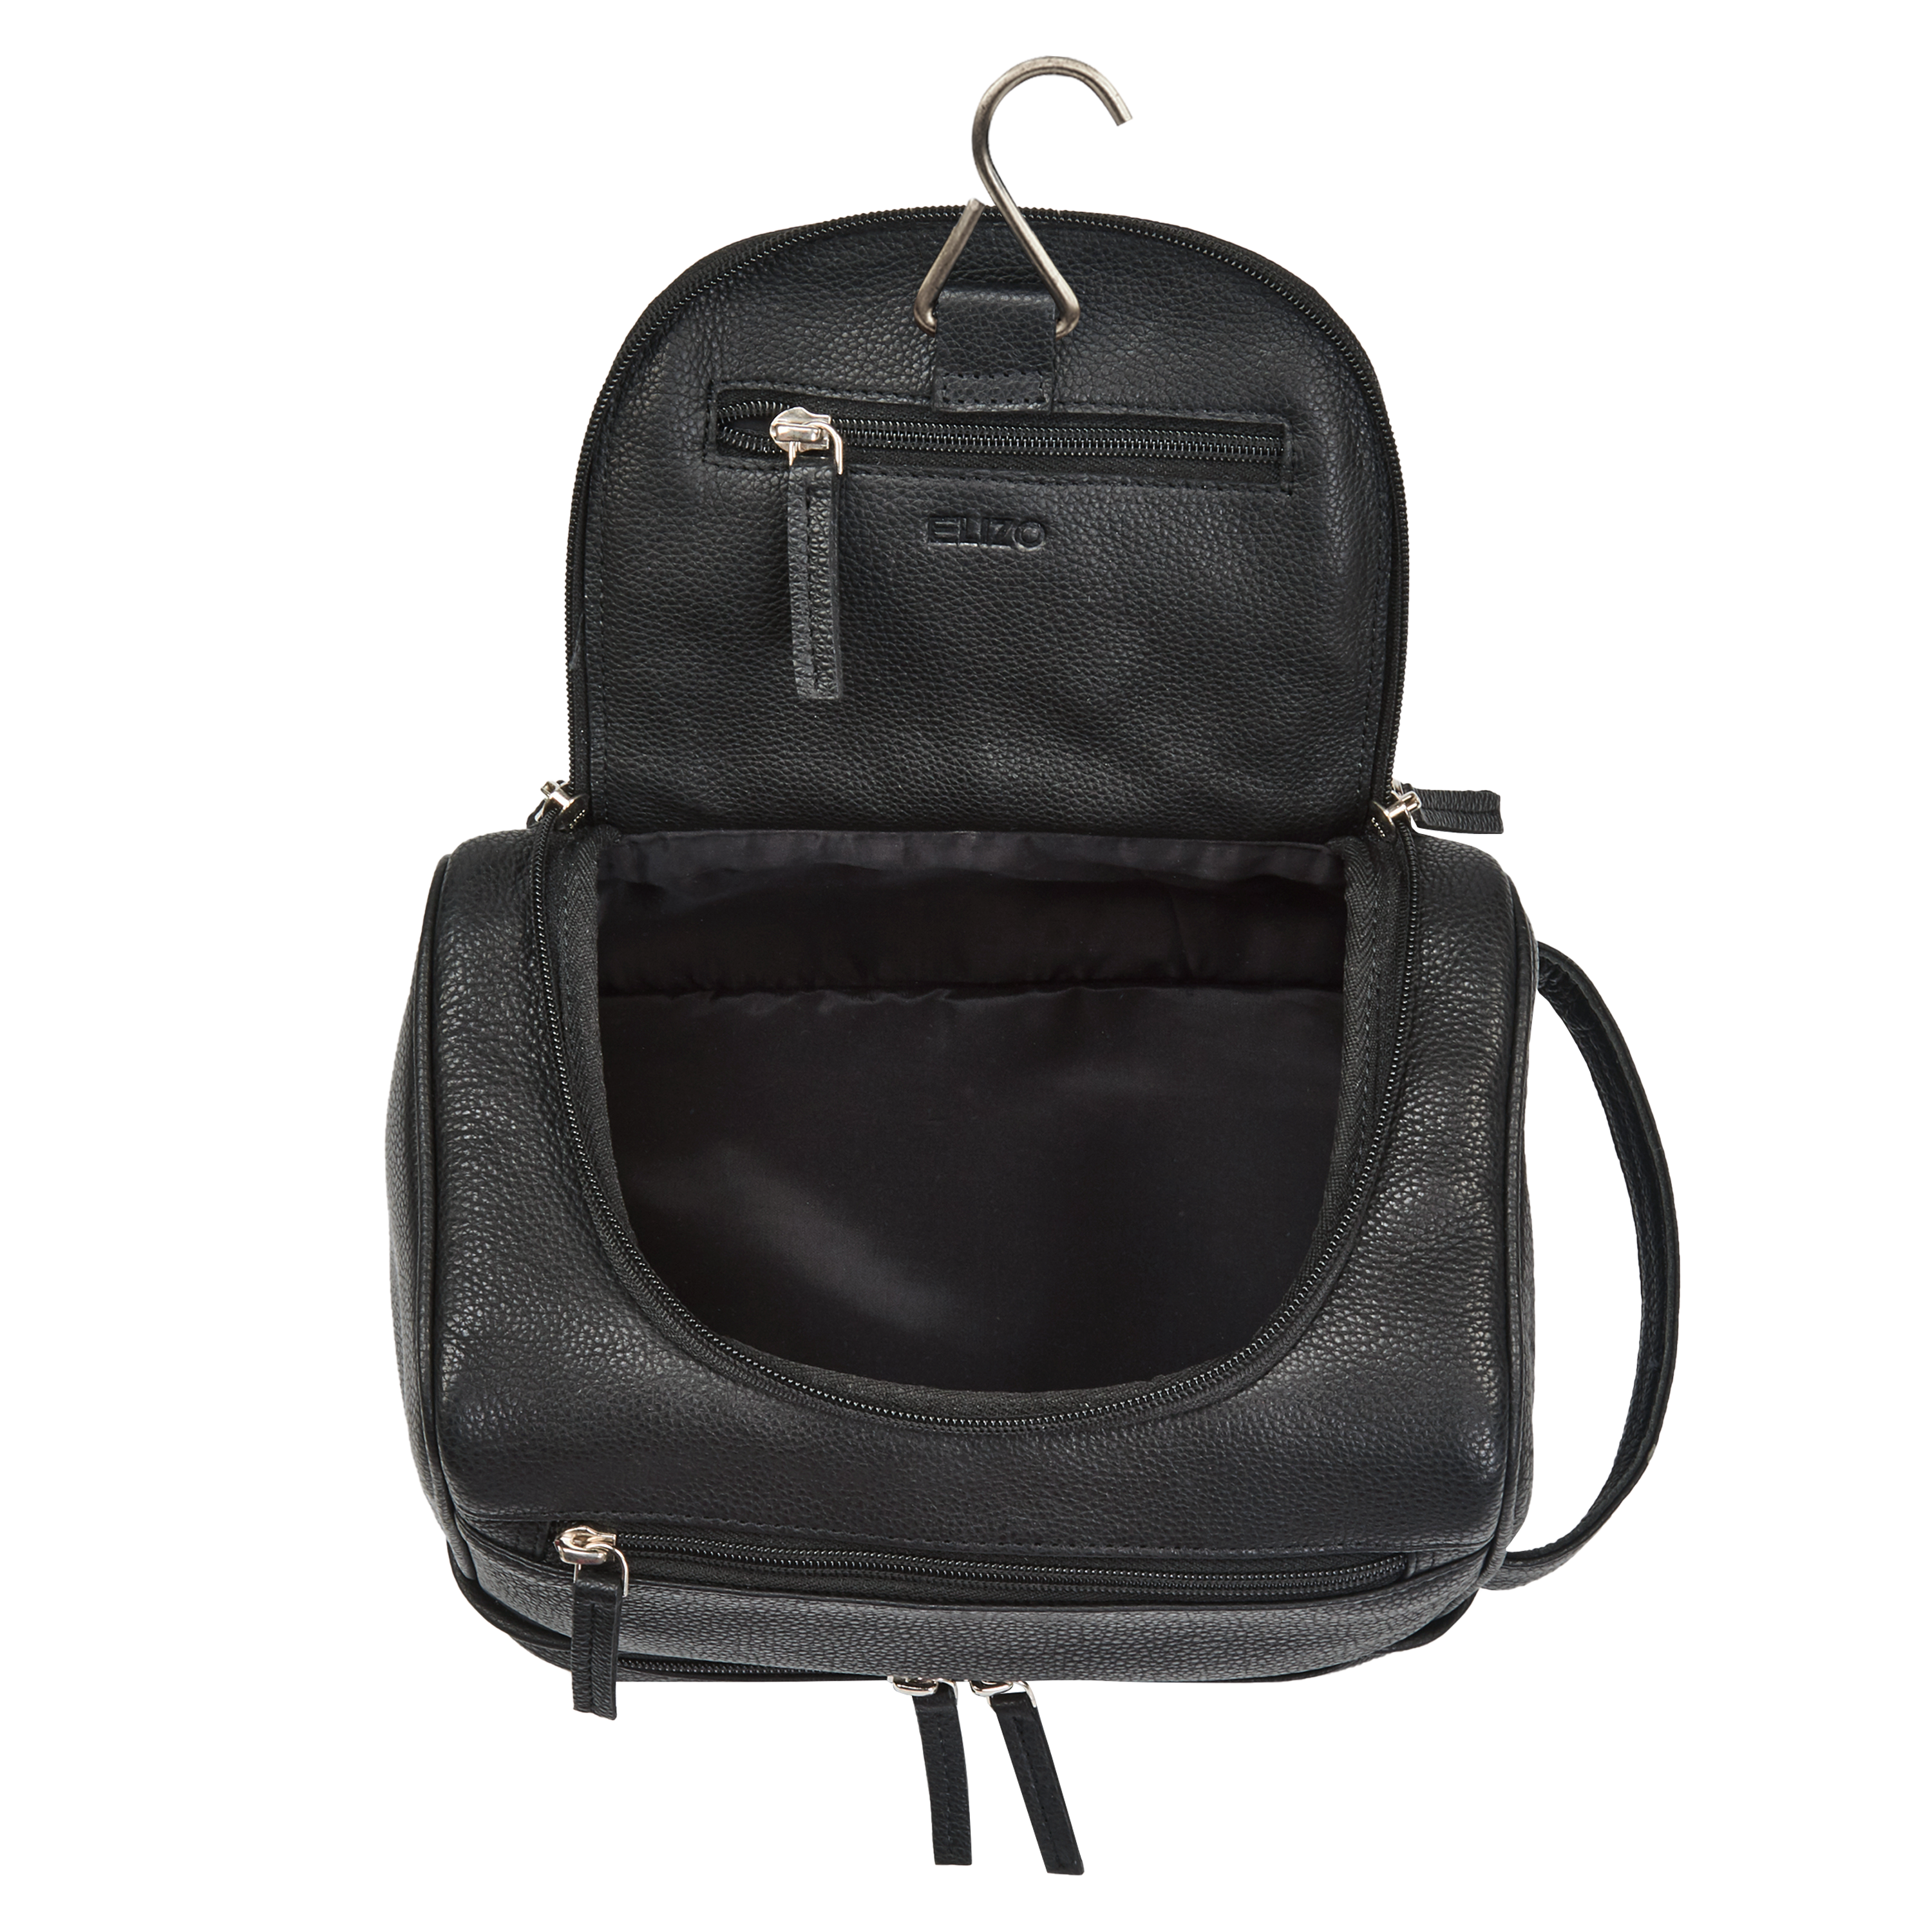 Leather Toiletry Bag Dopp Kit - Black Onyx (X-Large Tall)